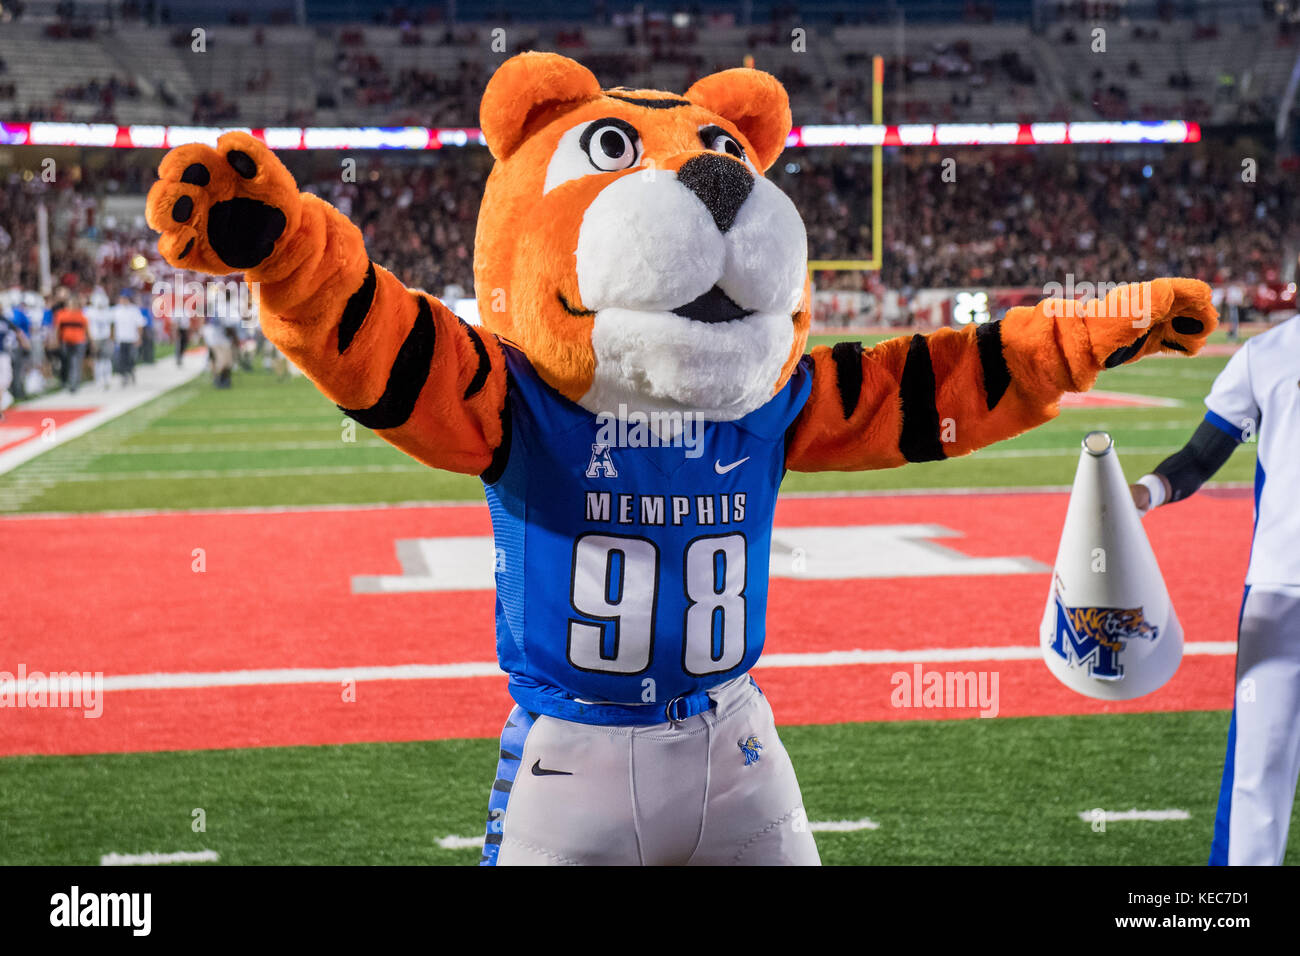 Houston, TX, USA. 19th Oct, 2017. Memphis Tigers mascot Pouncer